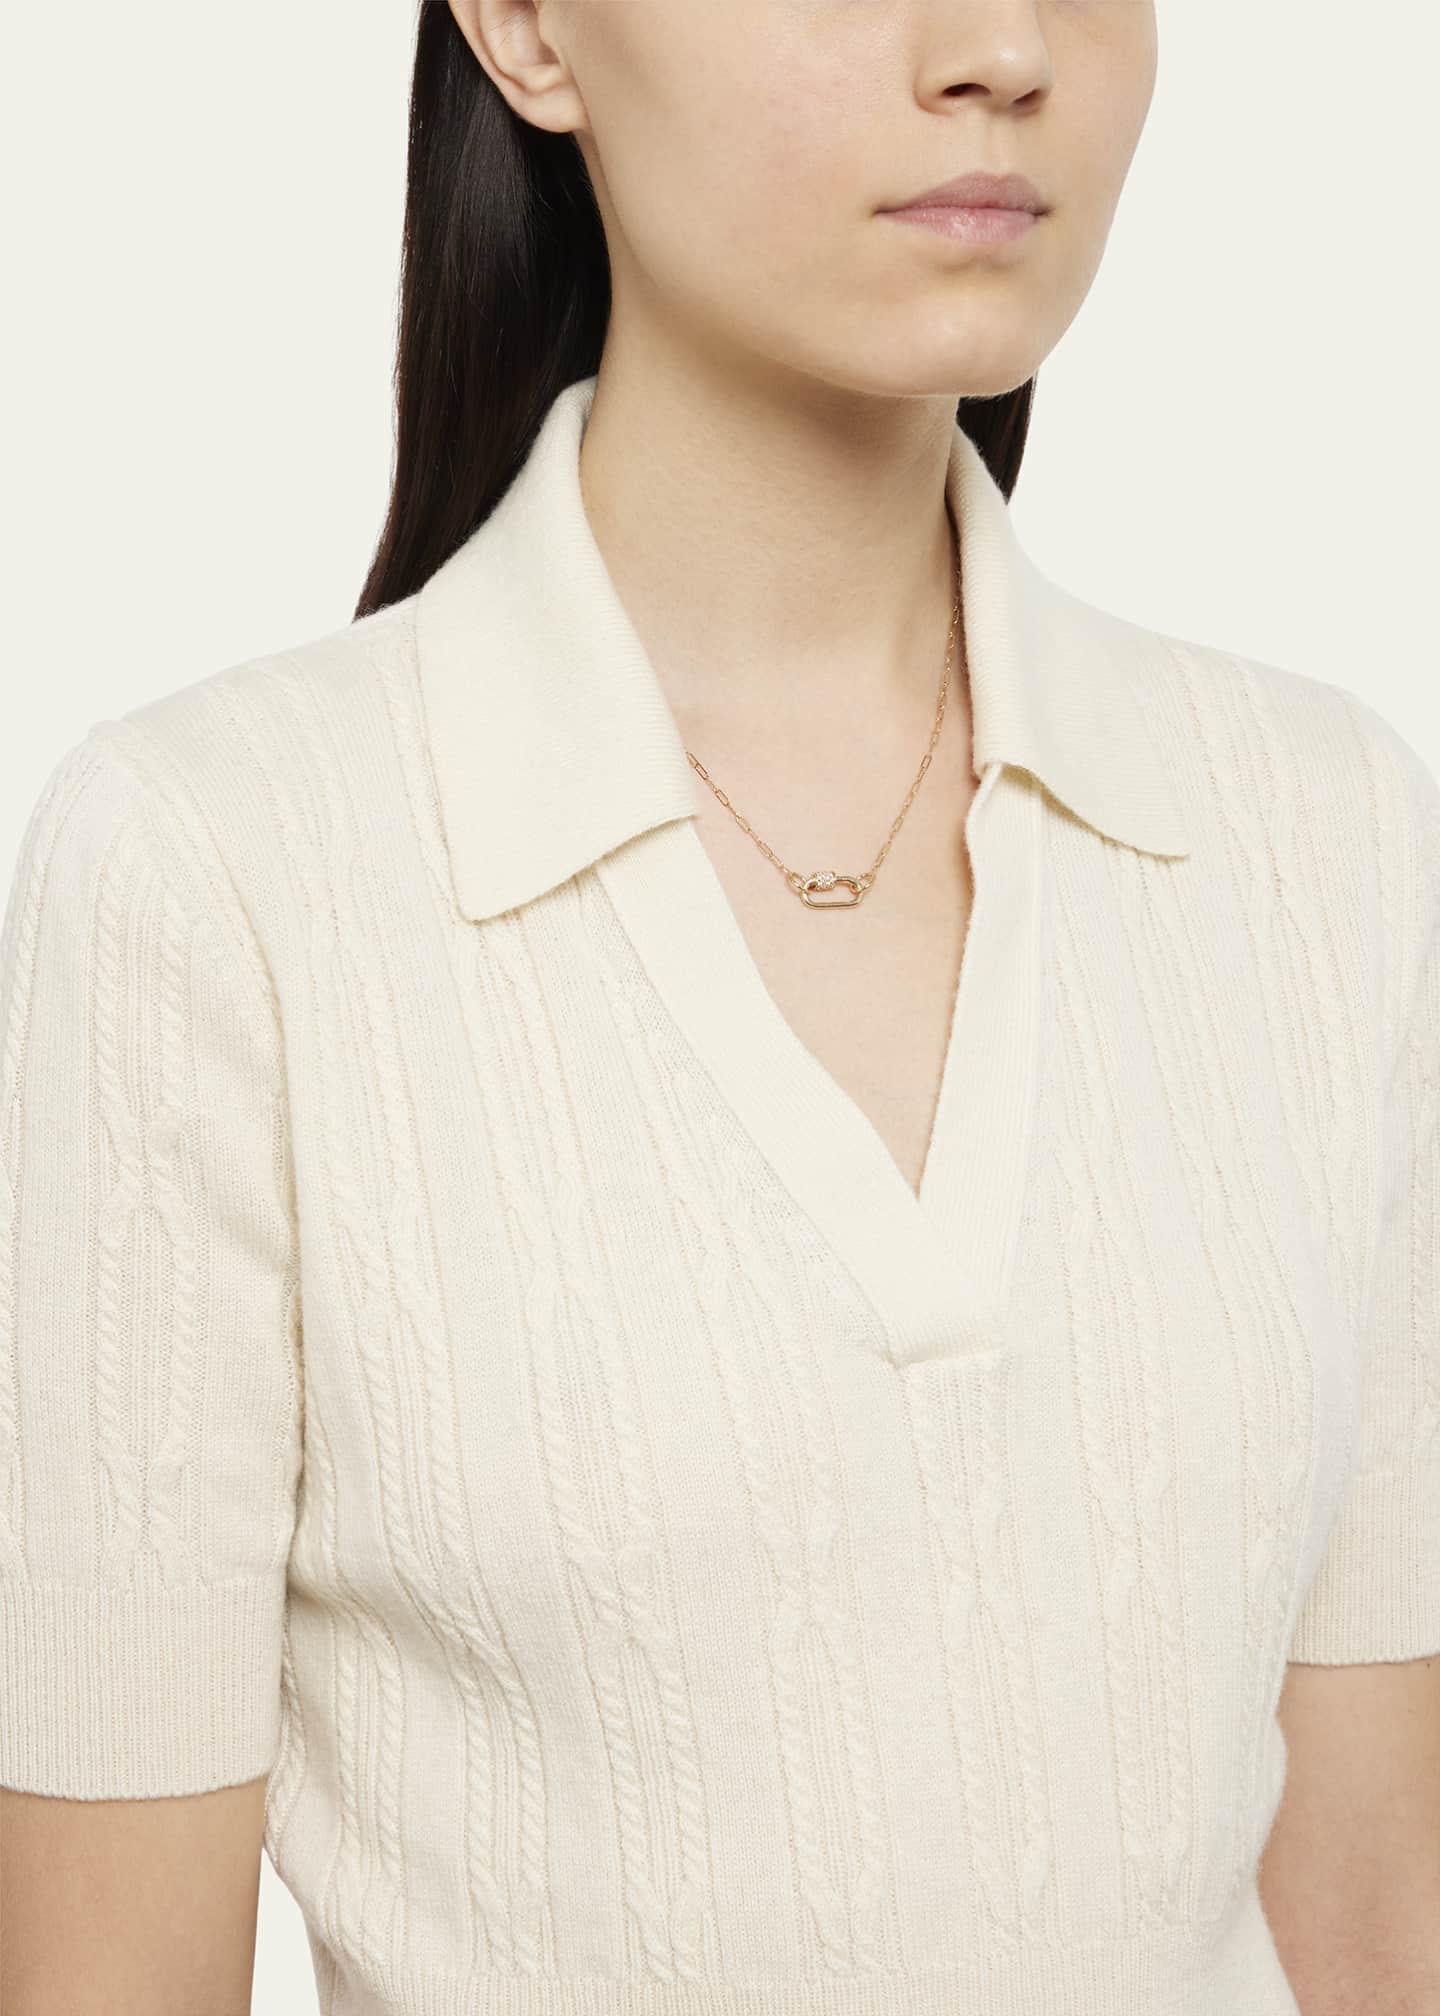 Fine Jewelry Brand Marla Aaron Launches At Bergdorf Goodman